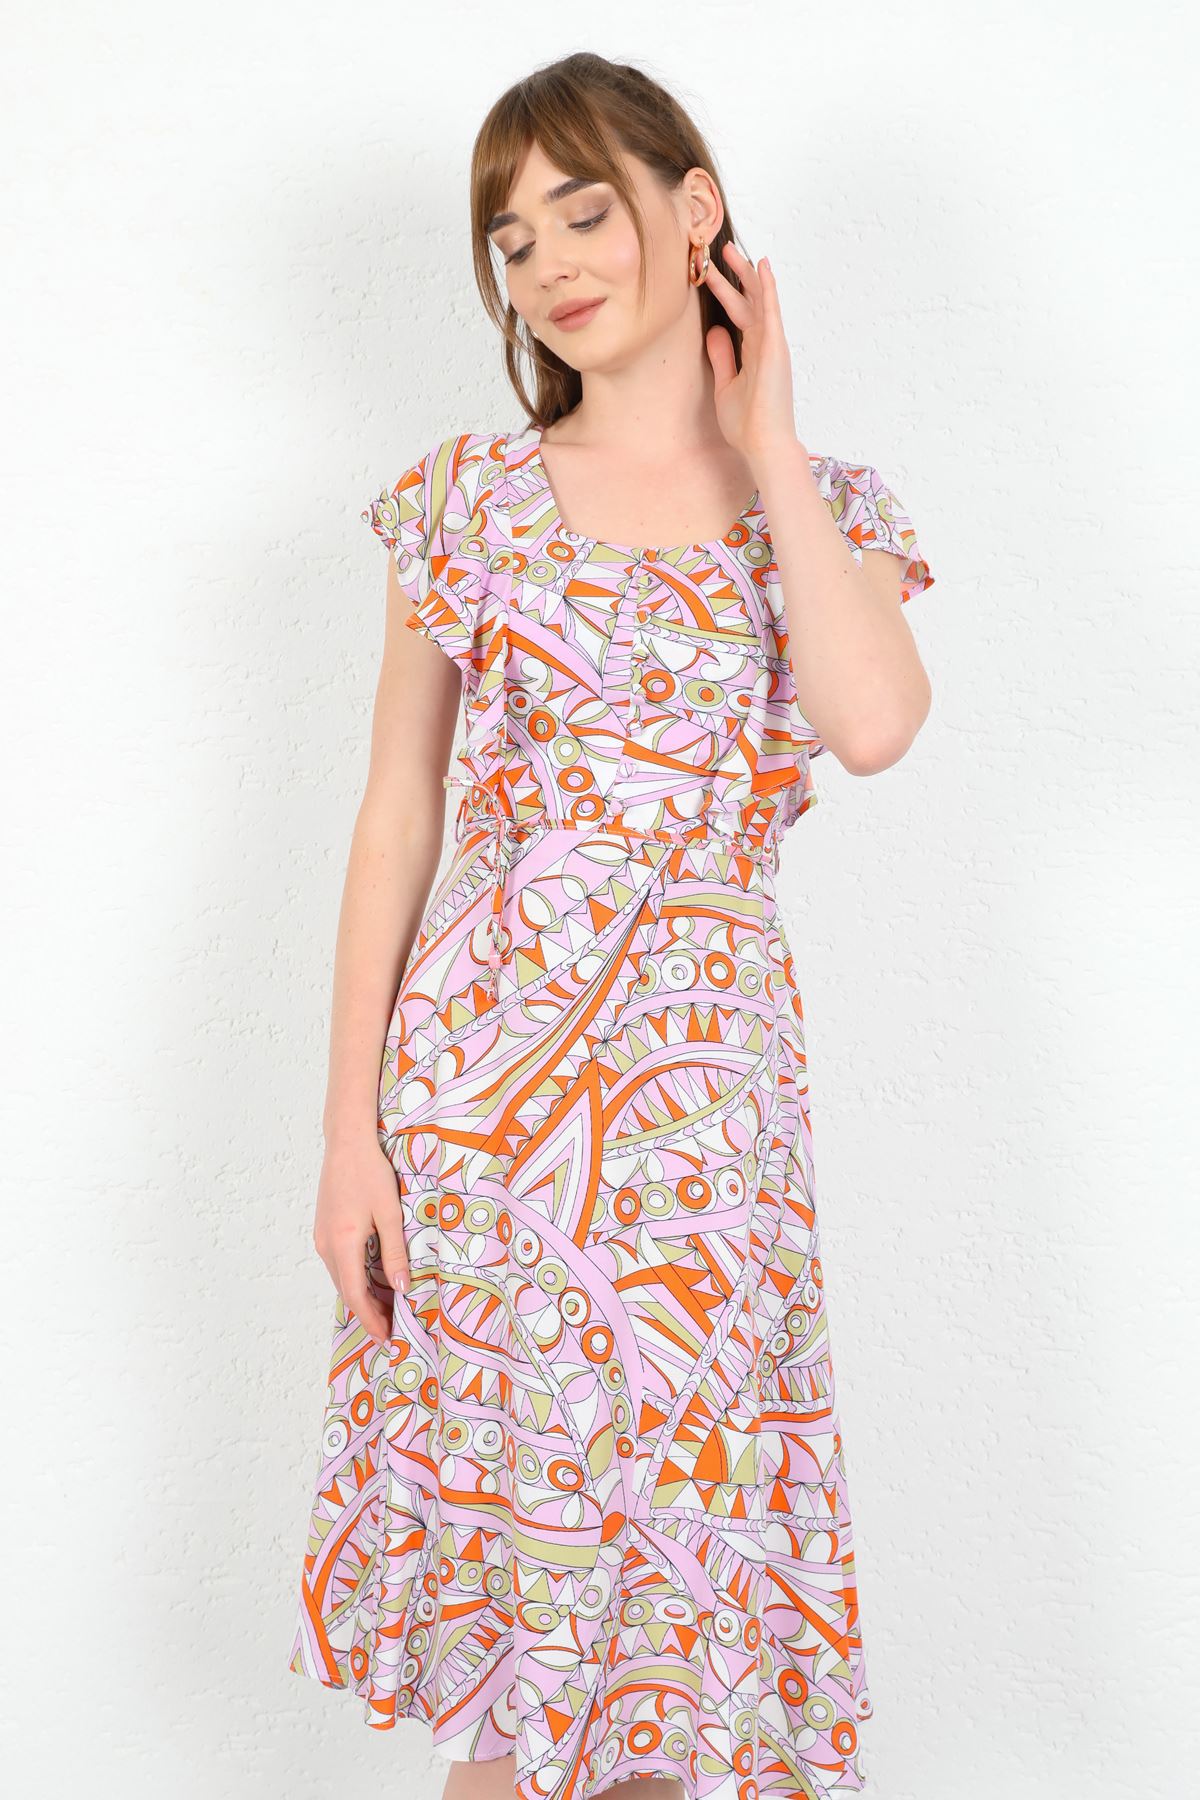 Viscon Fabric Geometric Pattern Frilly Women Dress-Lilac